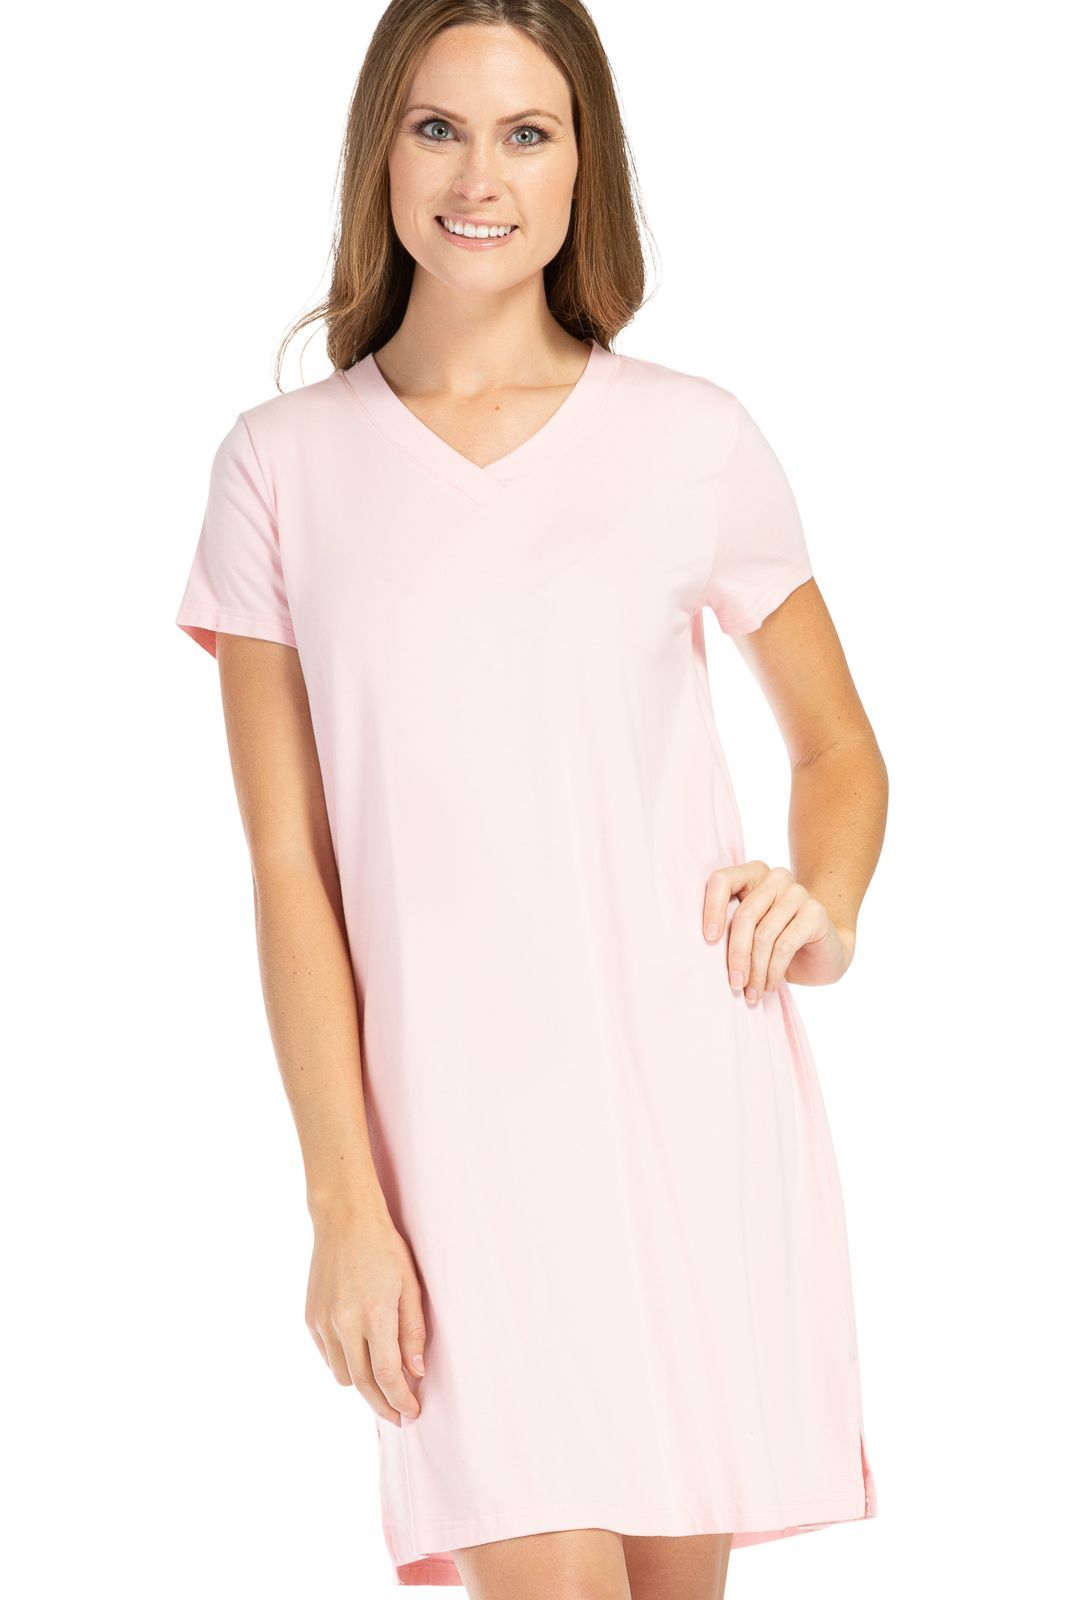 Night Shirt with Built in Bra Womens Sleepwear Sleeveless Tank